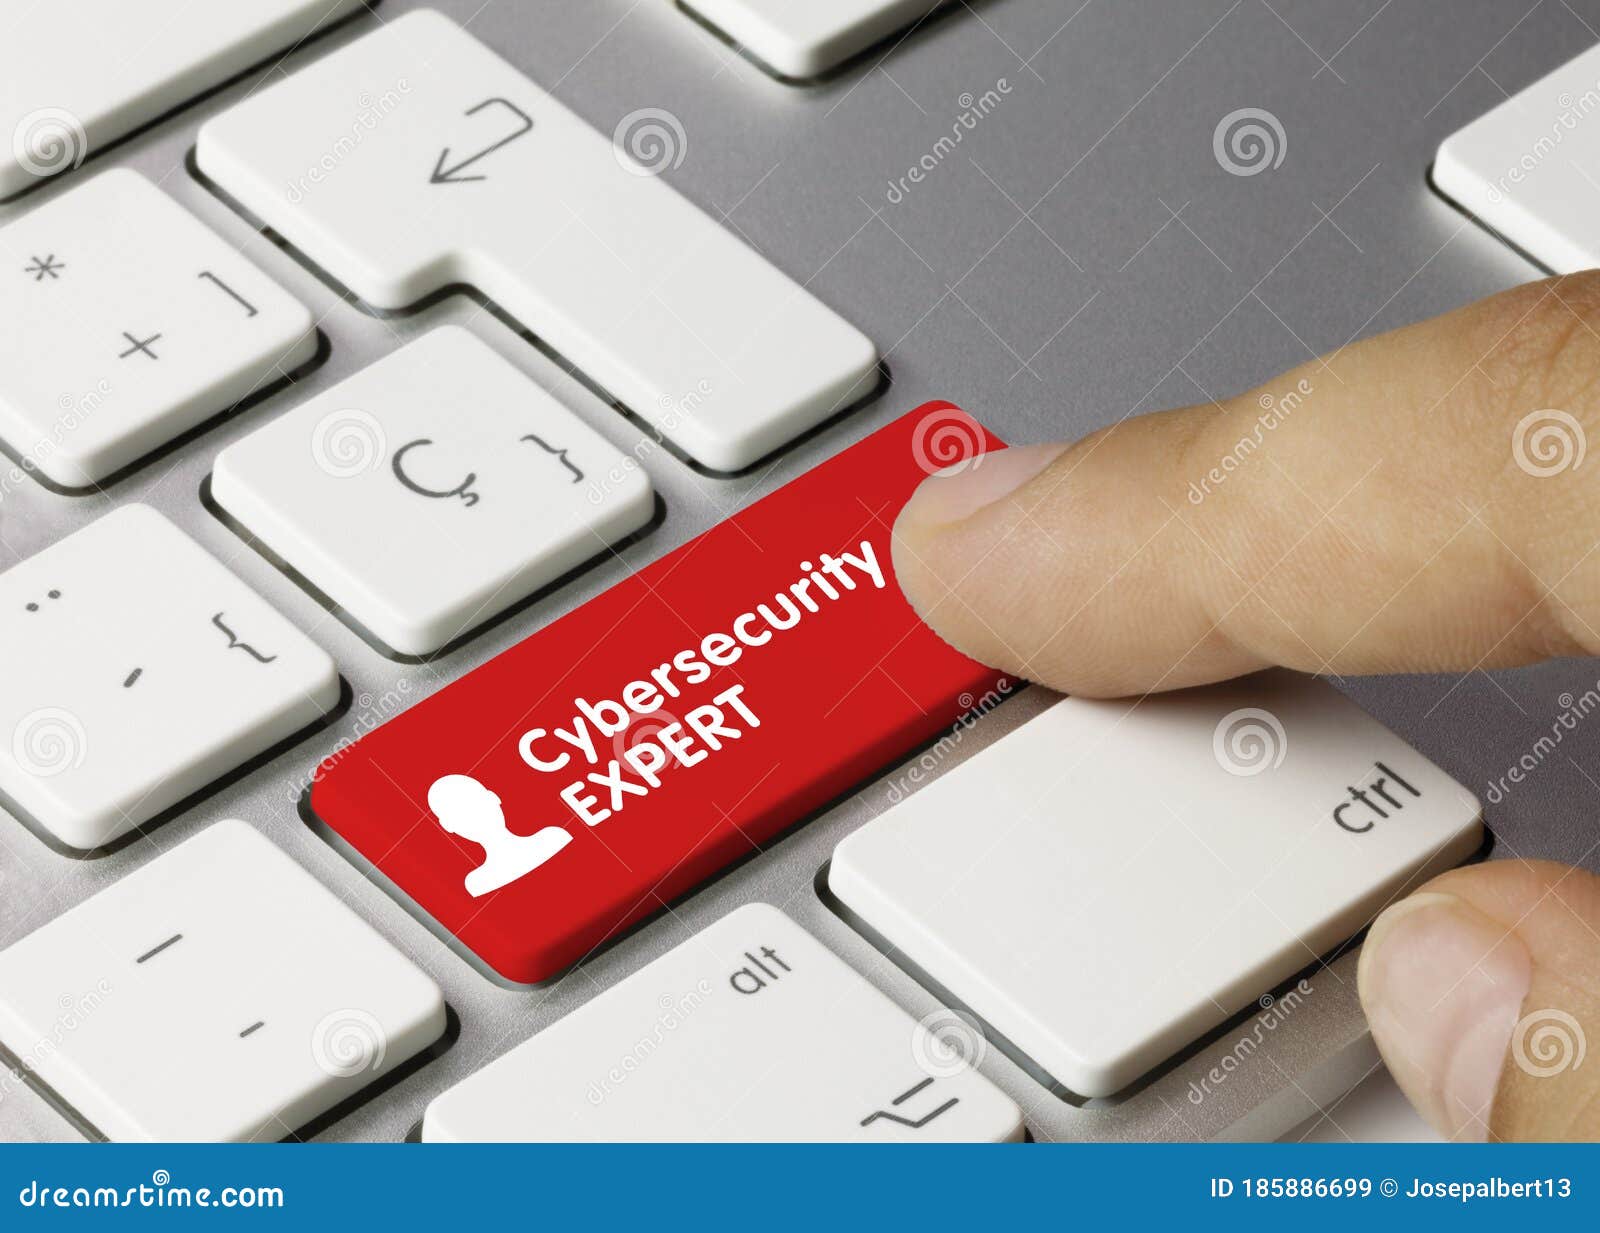 cybersecurity expert - inscription on red keyboard key